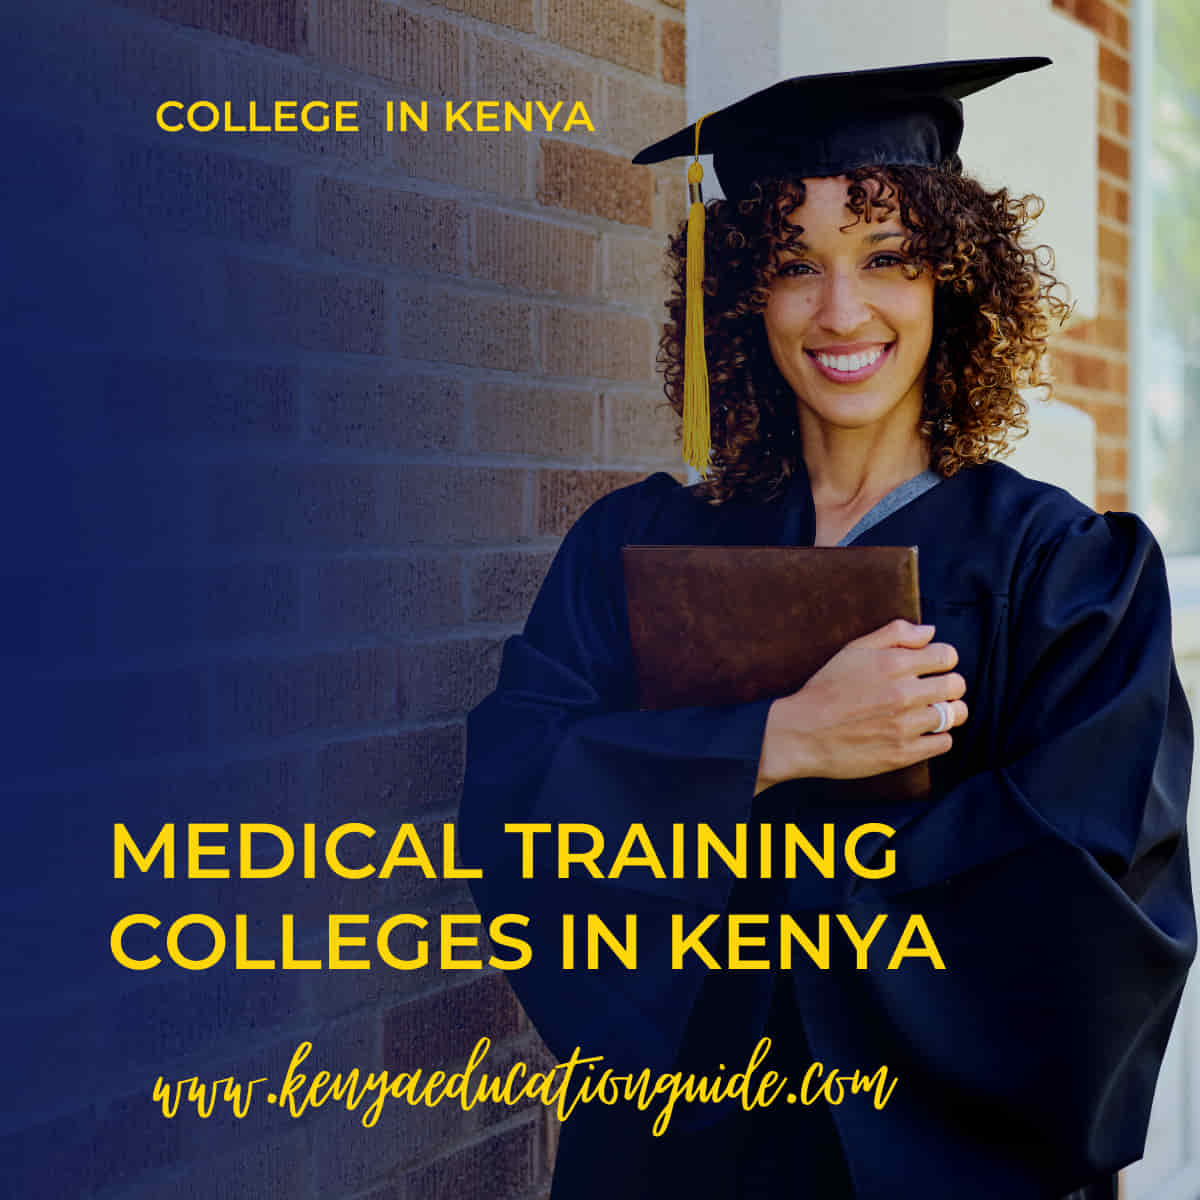 Medical training colleges in Kenya